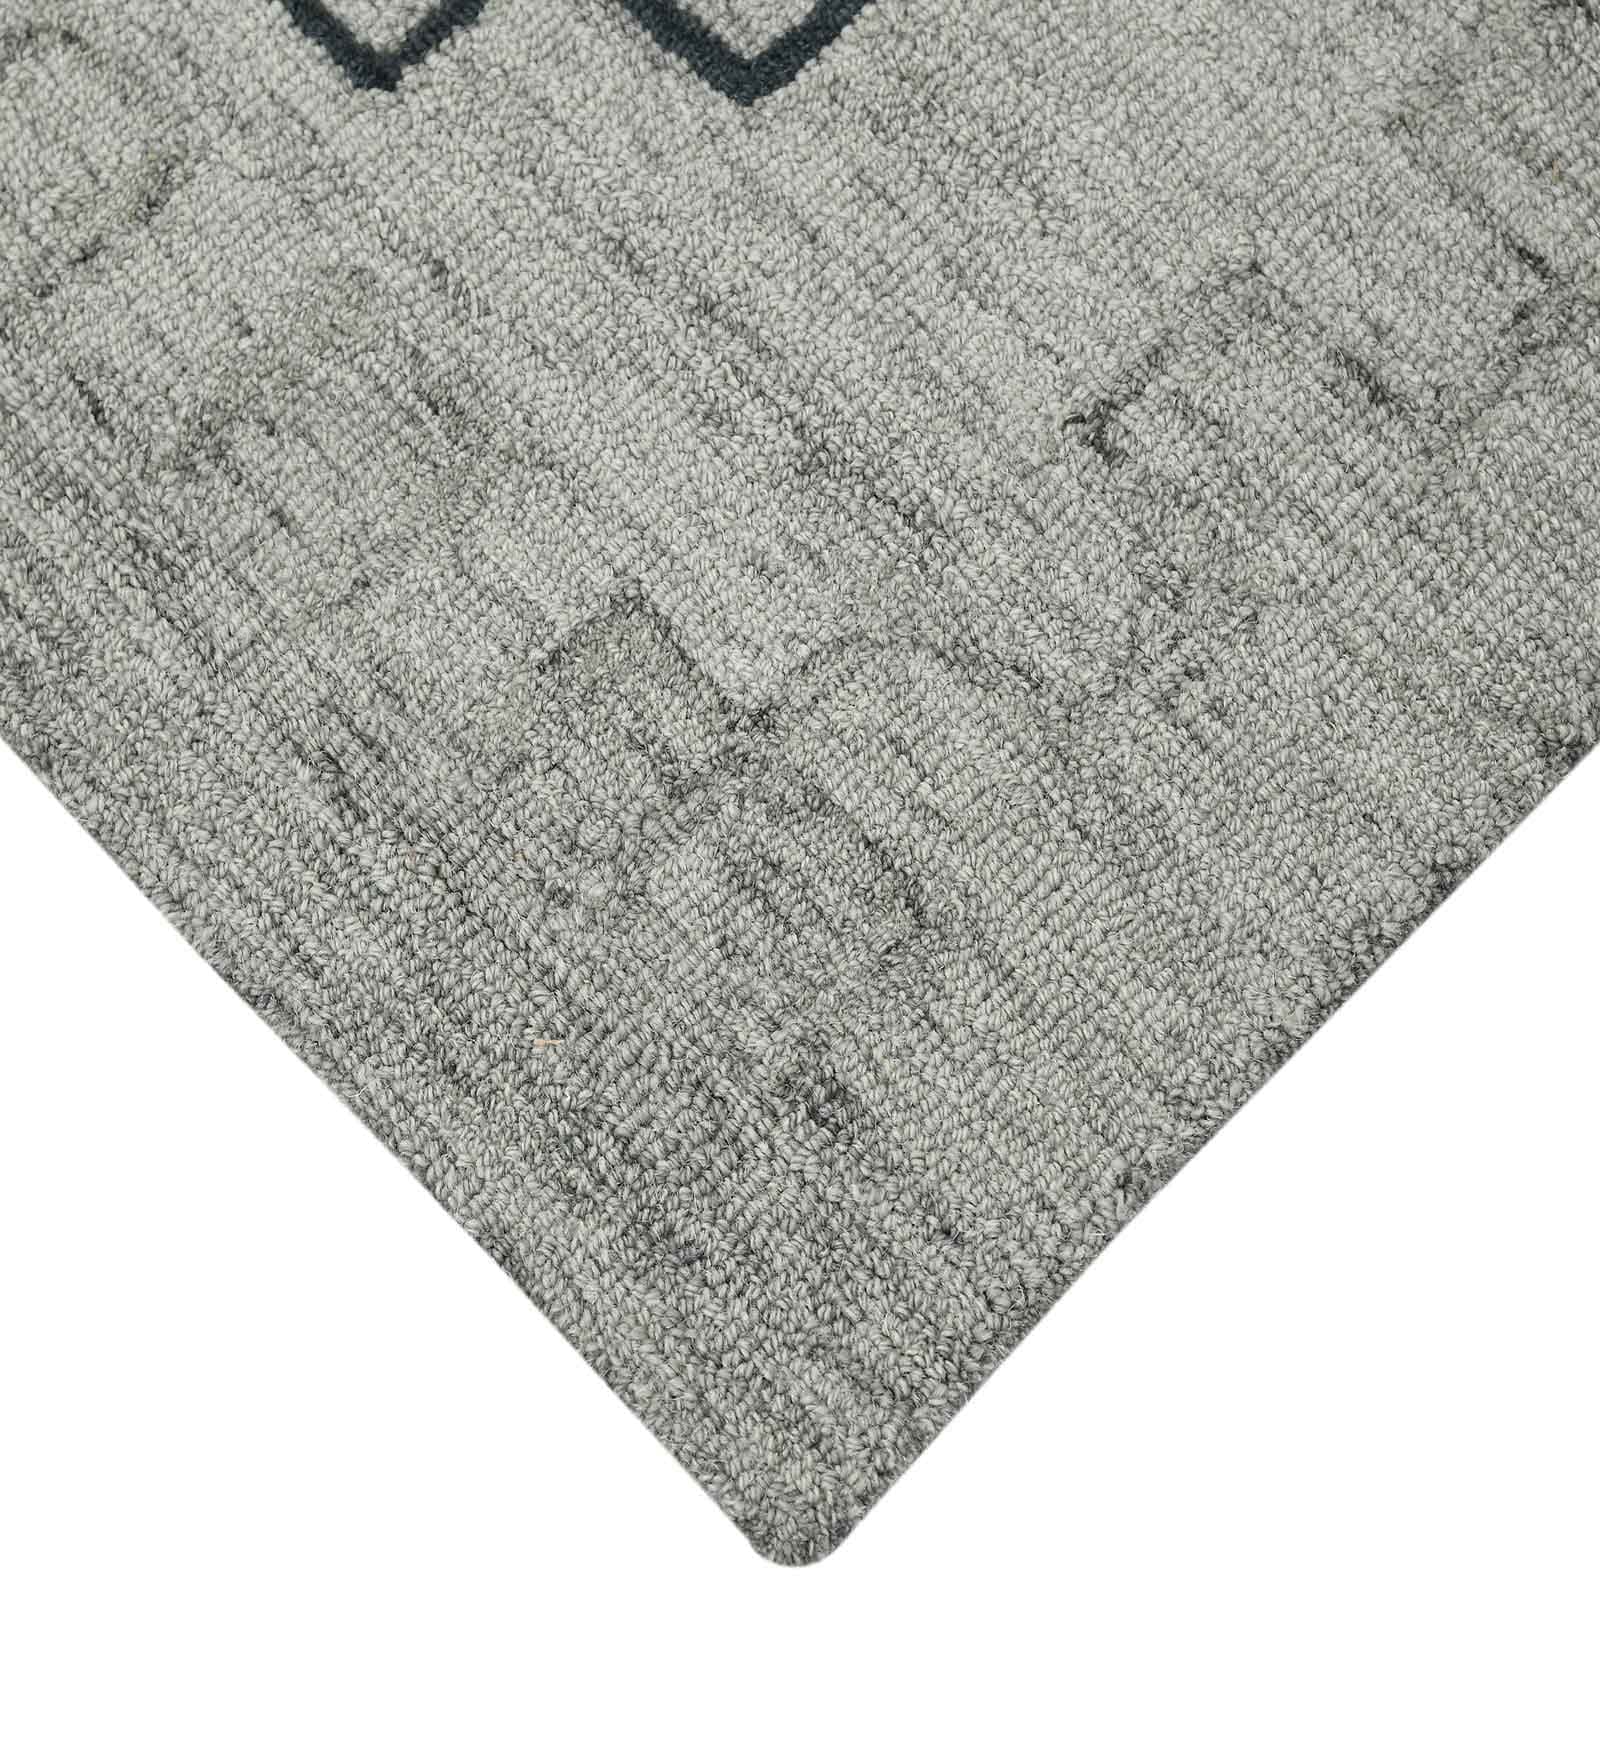 SHALE GRAY Wool Asteria 8x10 Feet  Hand-Tufted Carpet - Rug